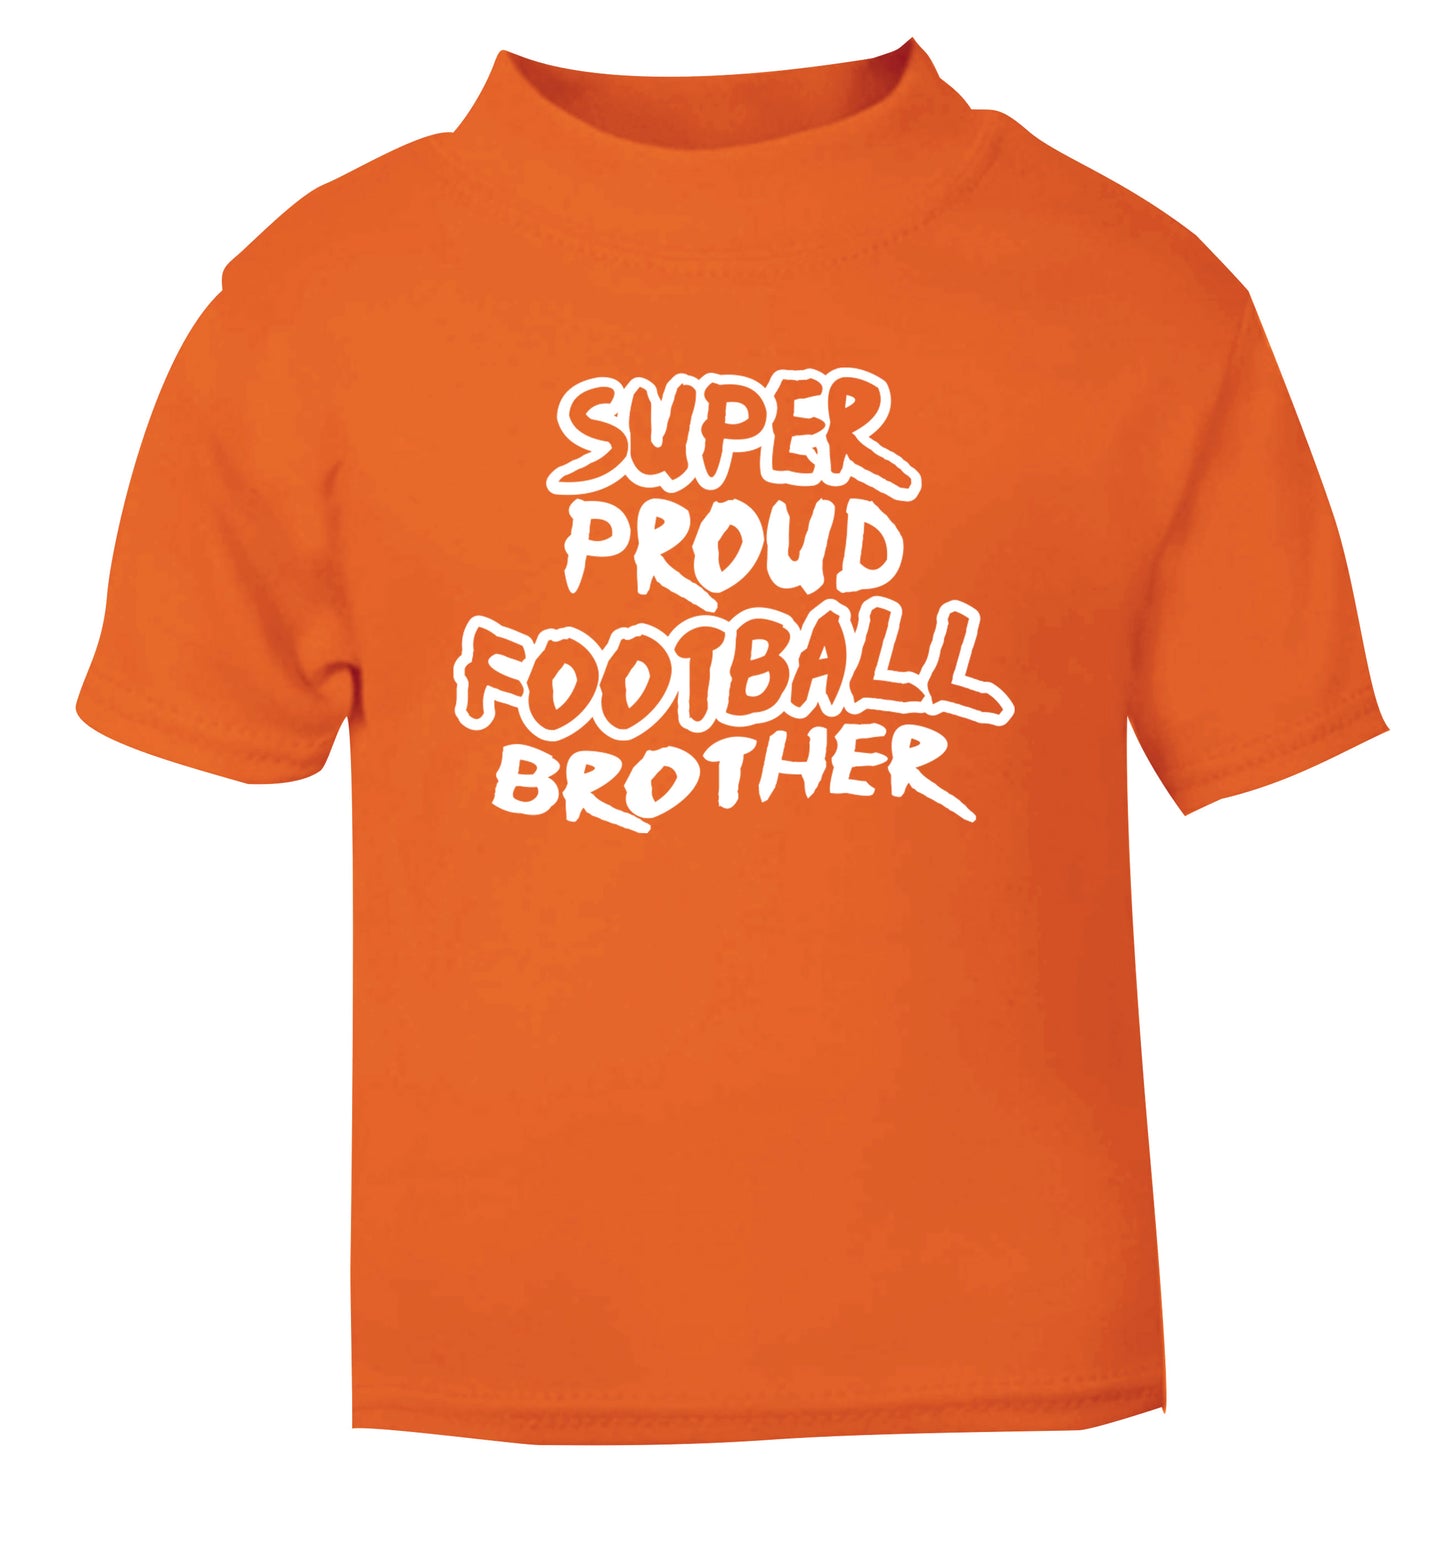 Super proud football brother orange Baby Toddler Tshirt 2 Years